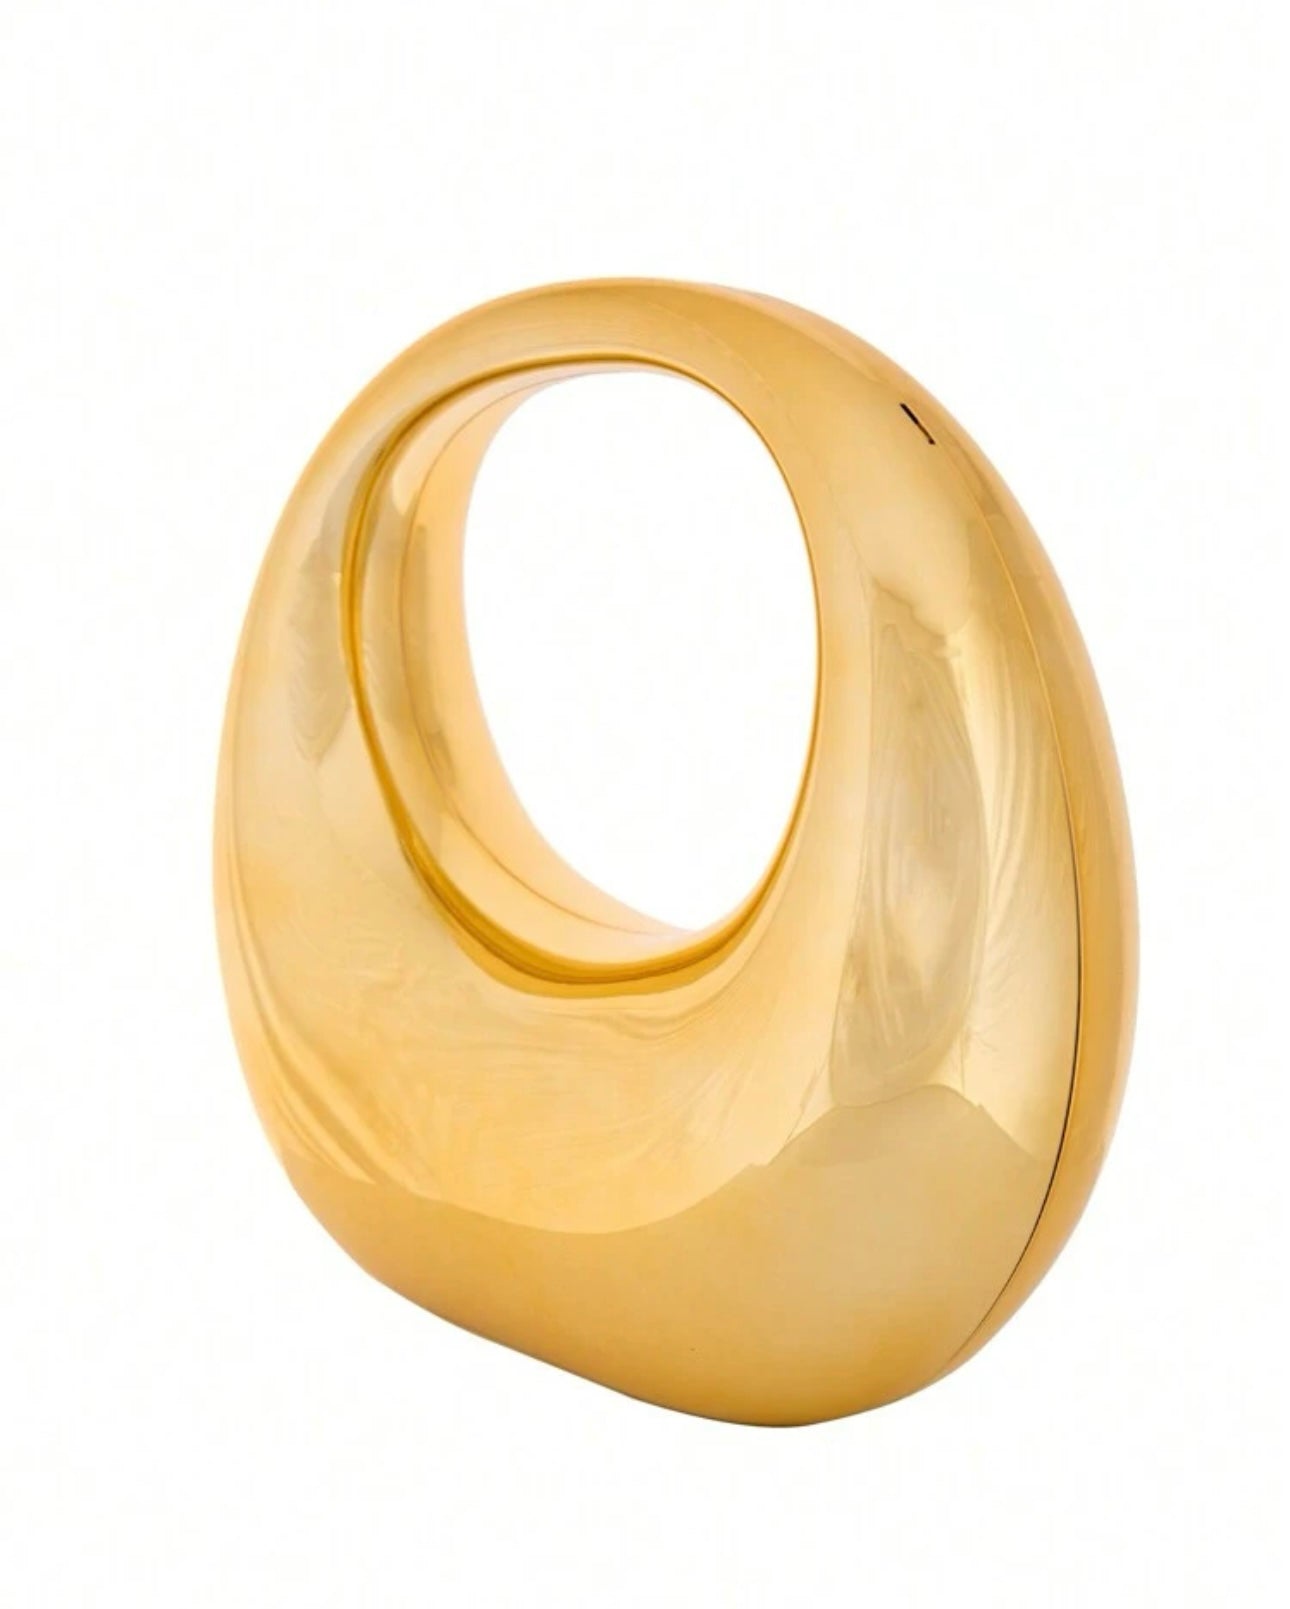 Max Acrylic Circle Clutch (Gold)